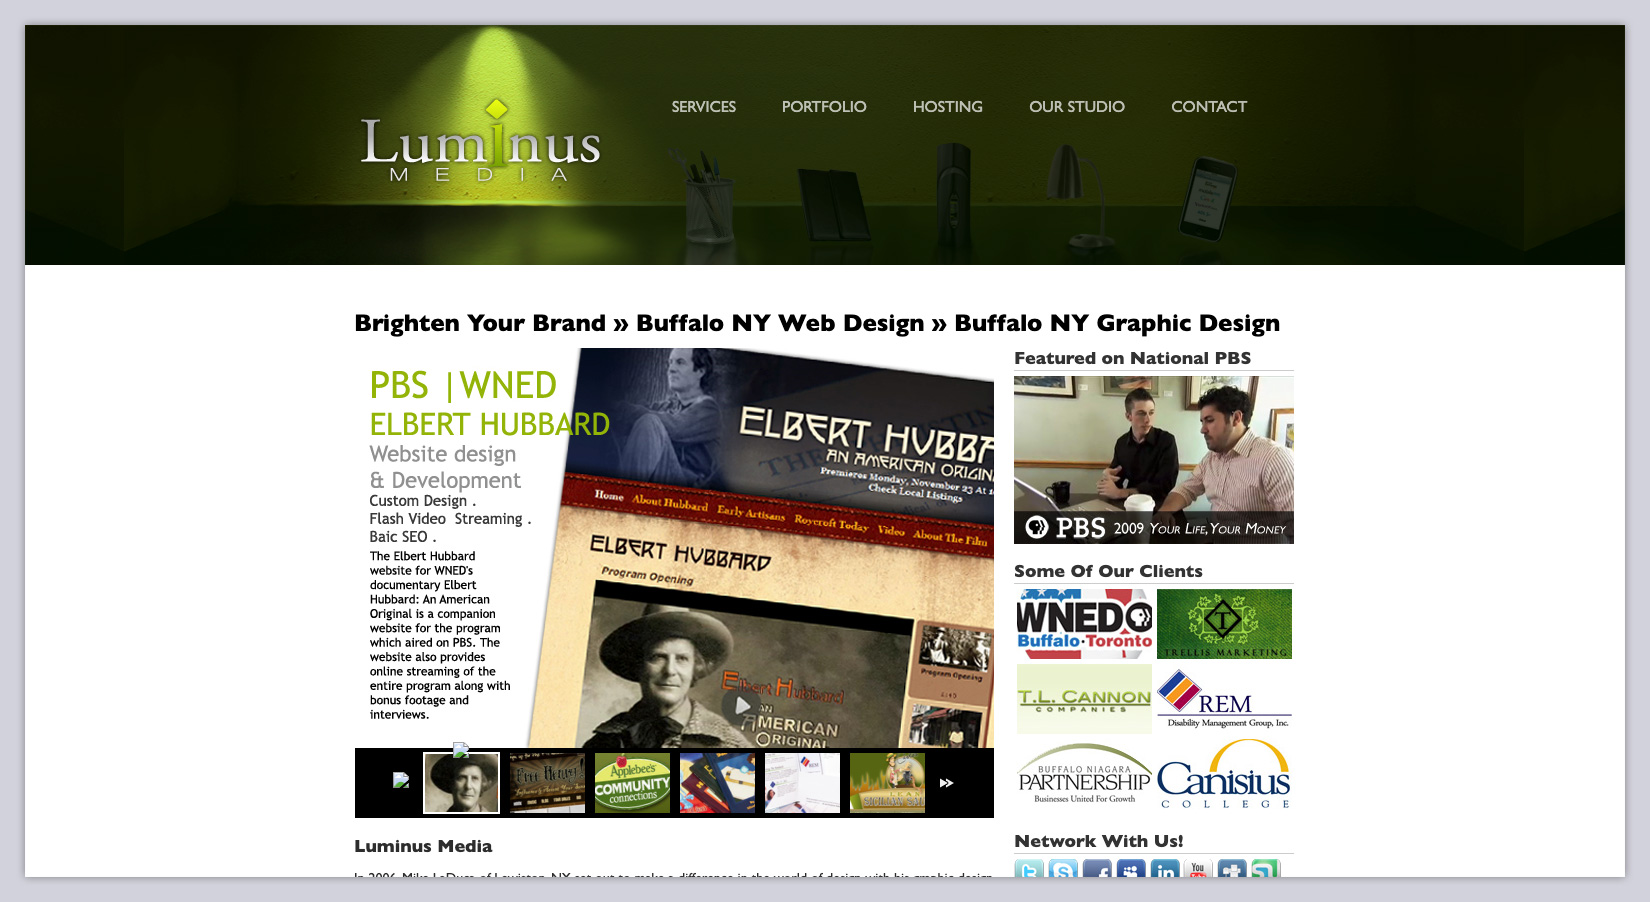 Benefits of a Website Redesign: Our Website Autobiography | Luminus Website v1 2009